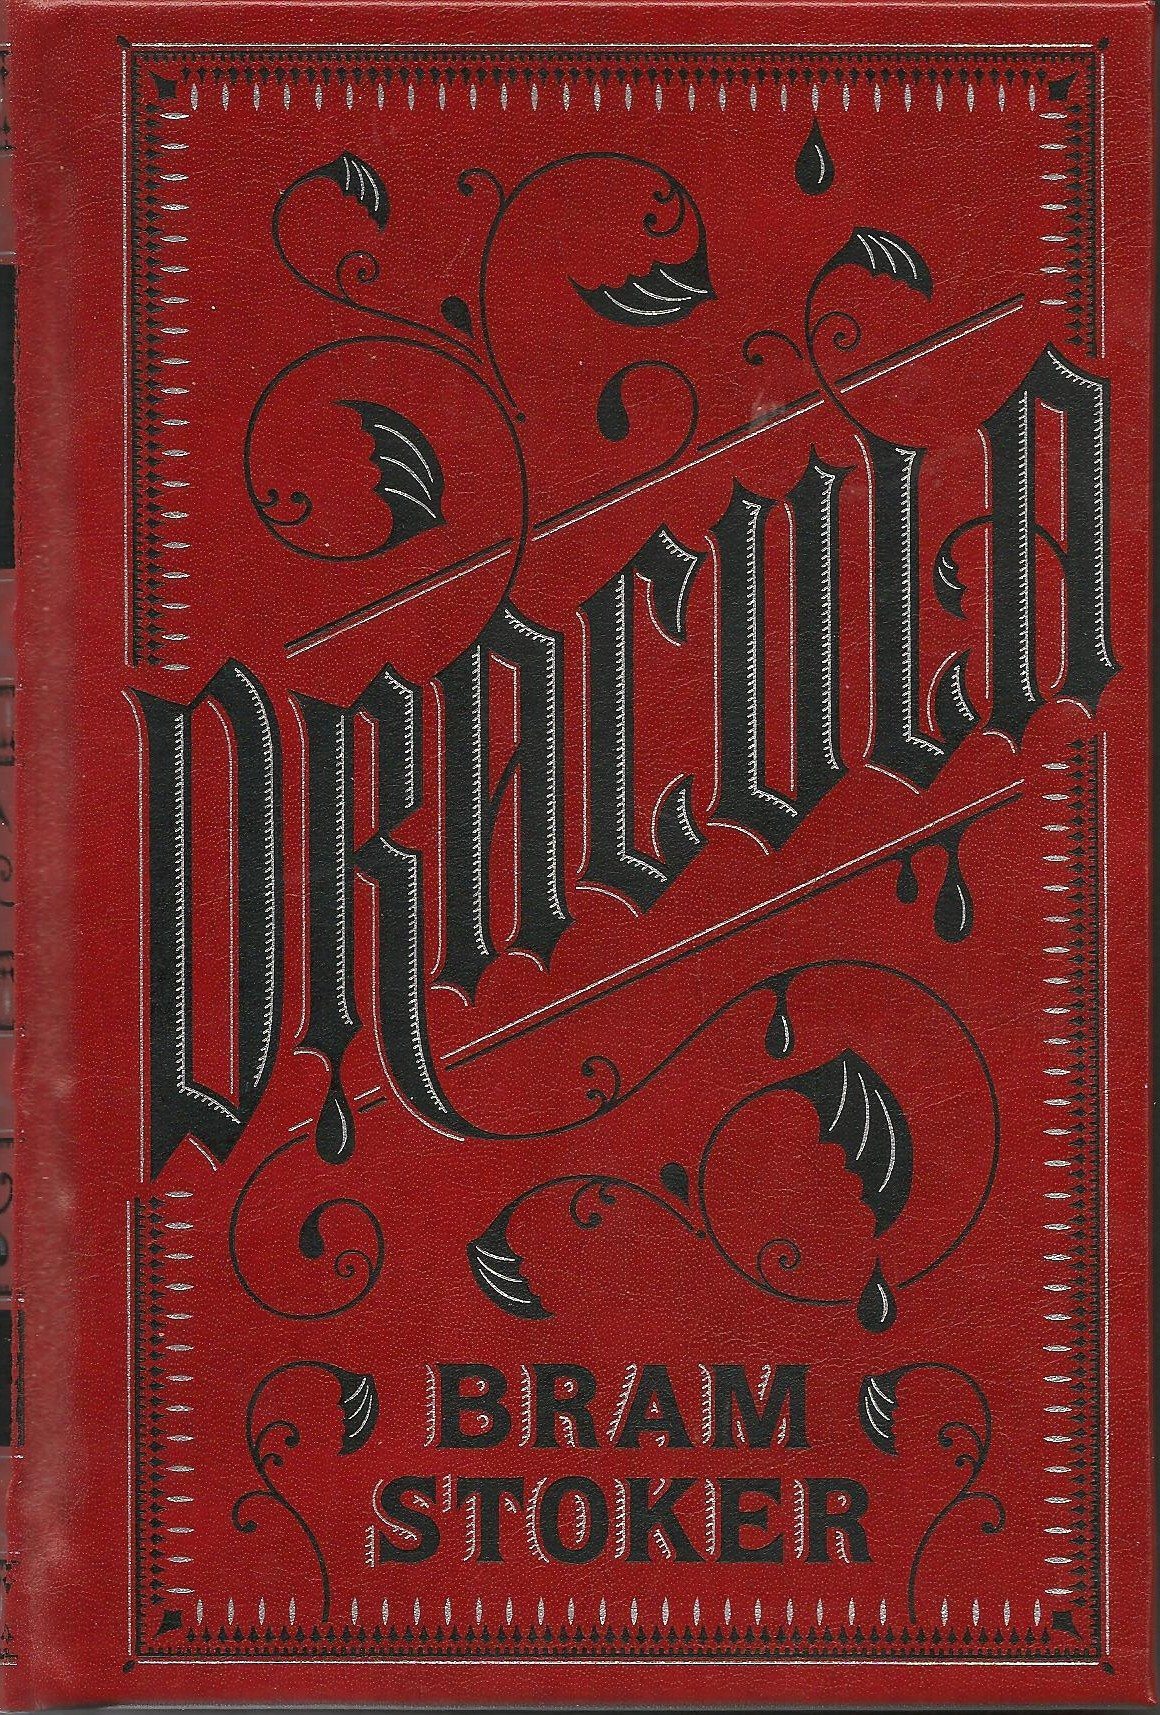 dracula-book-cover-e1368750274302